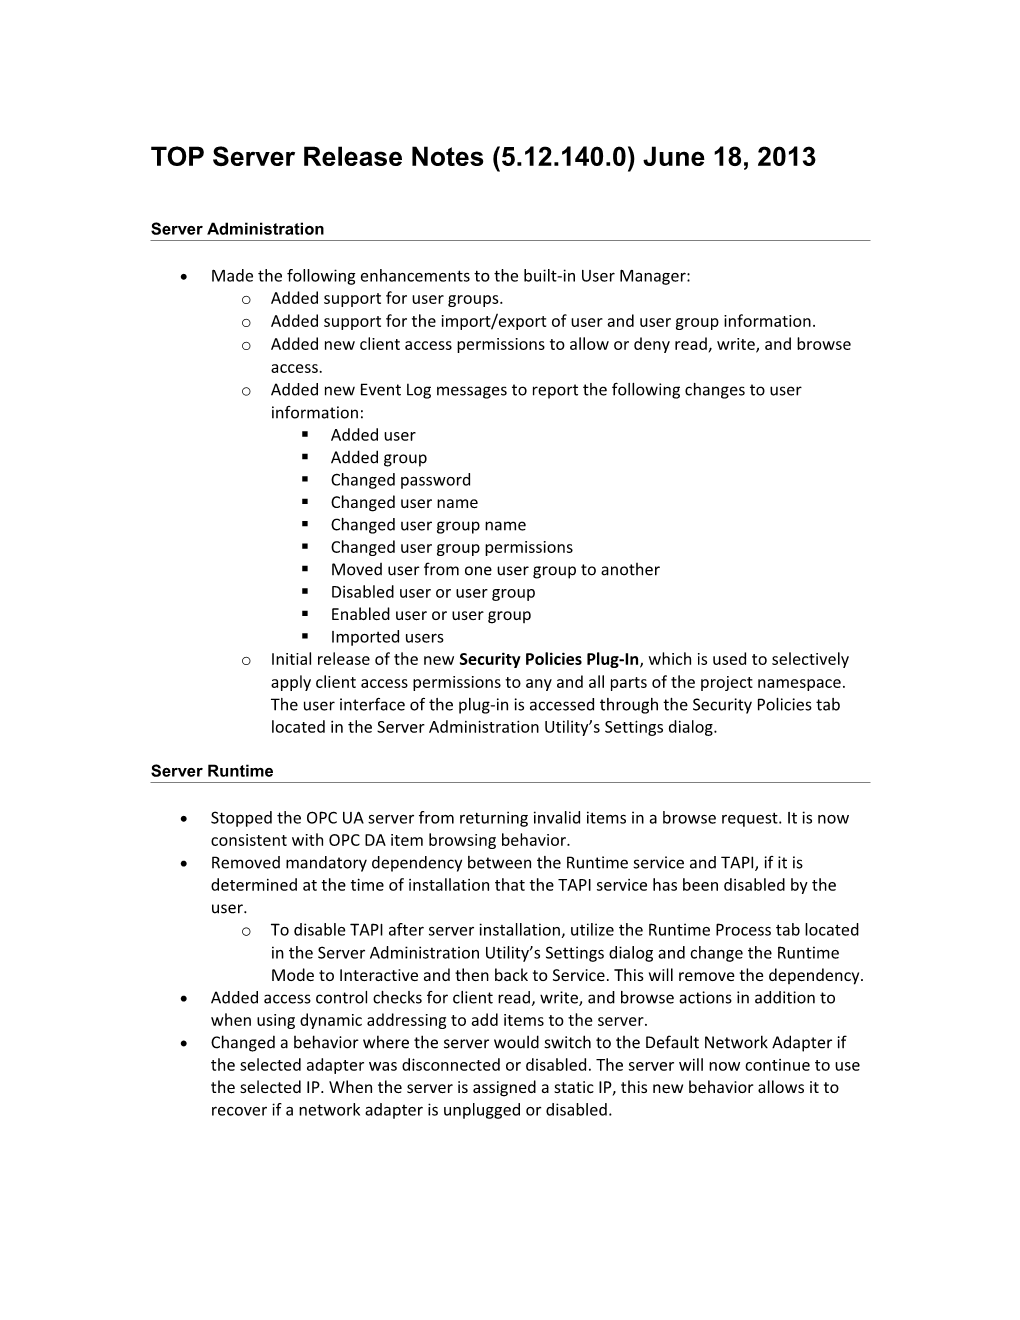 TOP Server Release Notes (5.12.140.0) June 18, 2013 s1